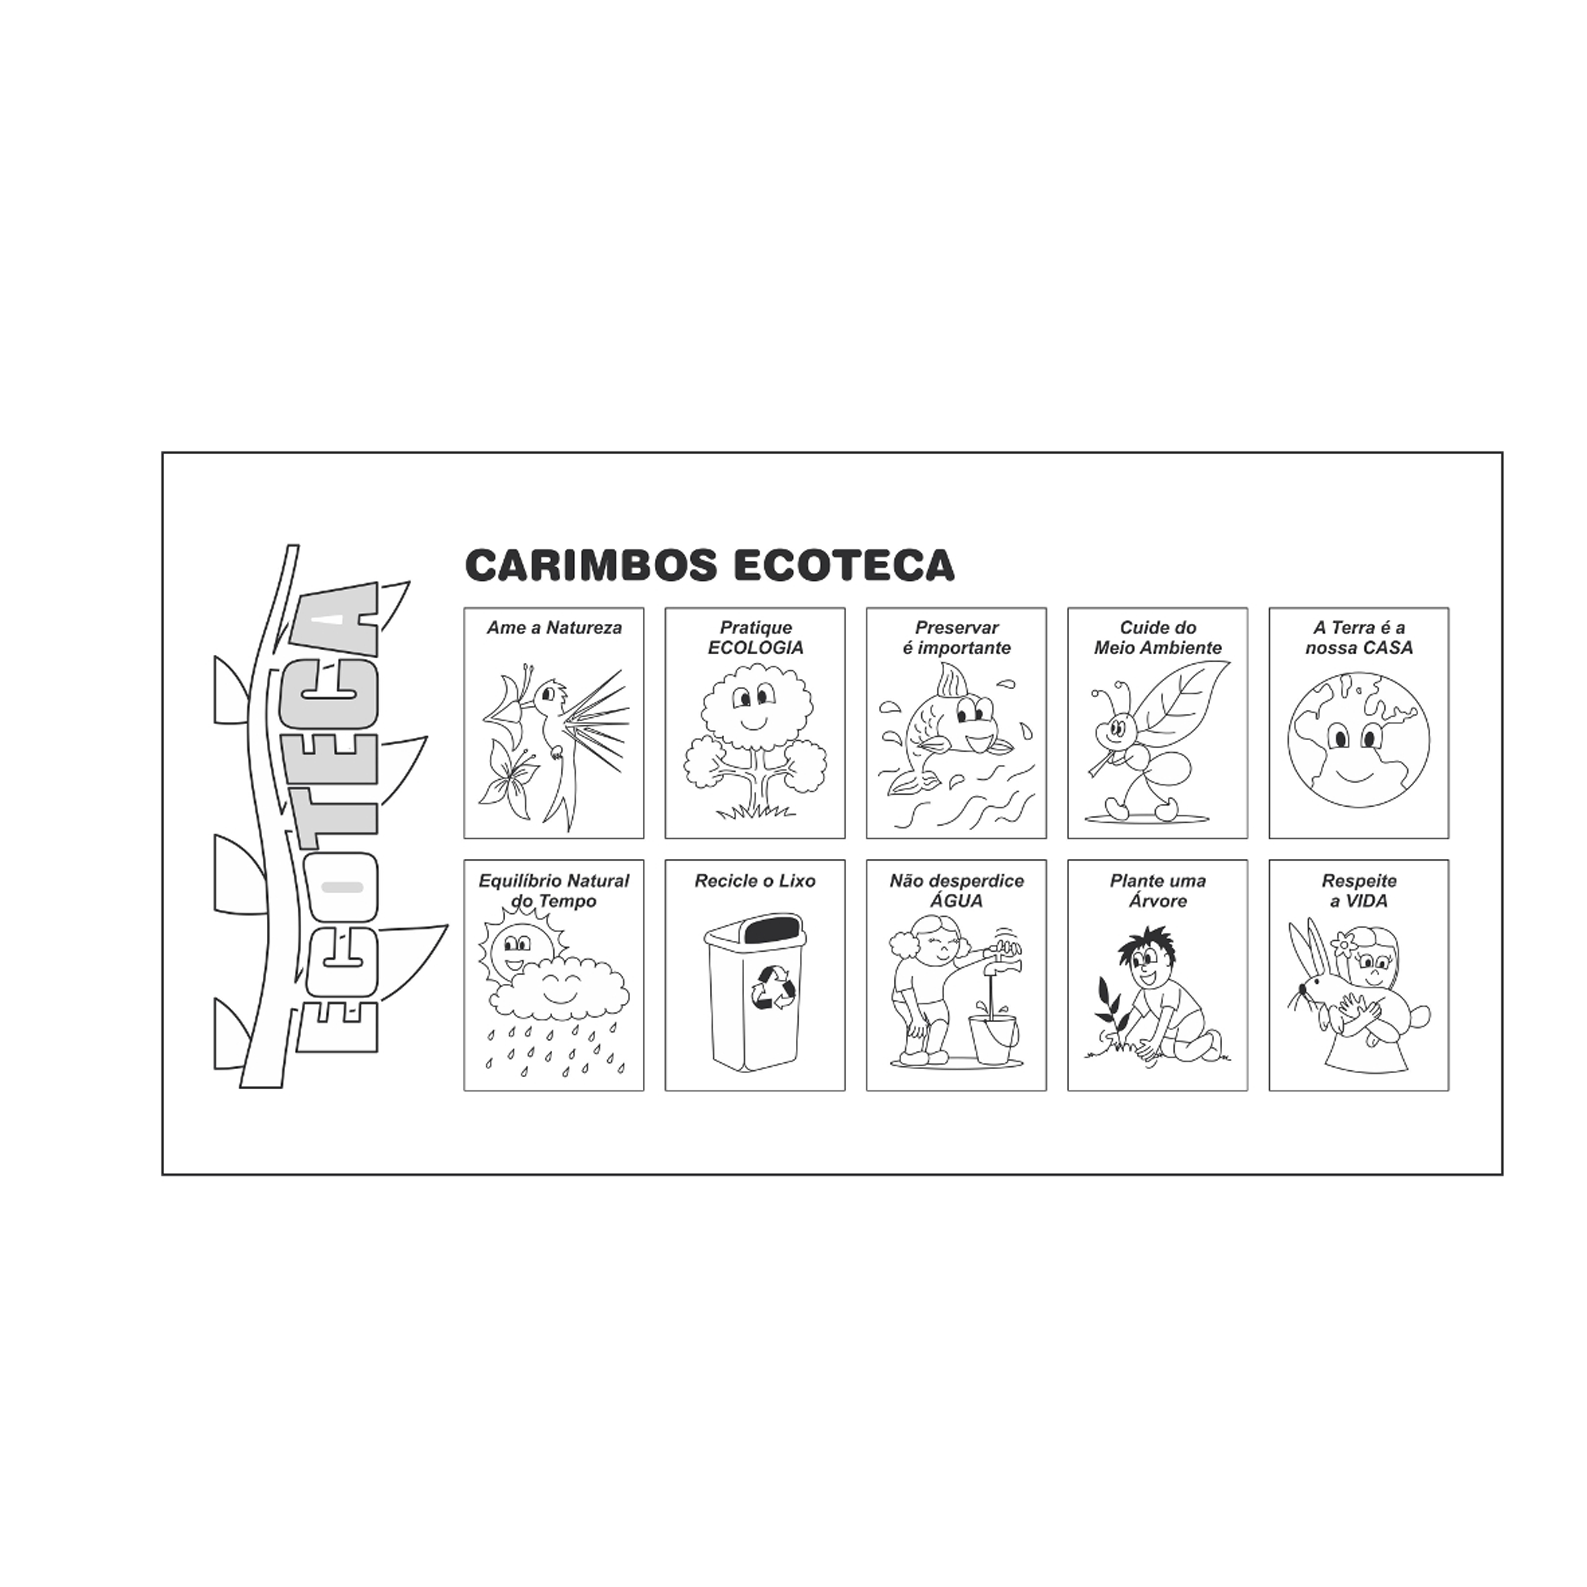 Carimbo Ecoteca 